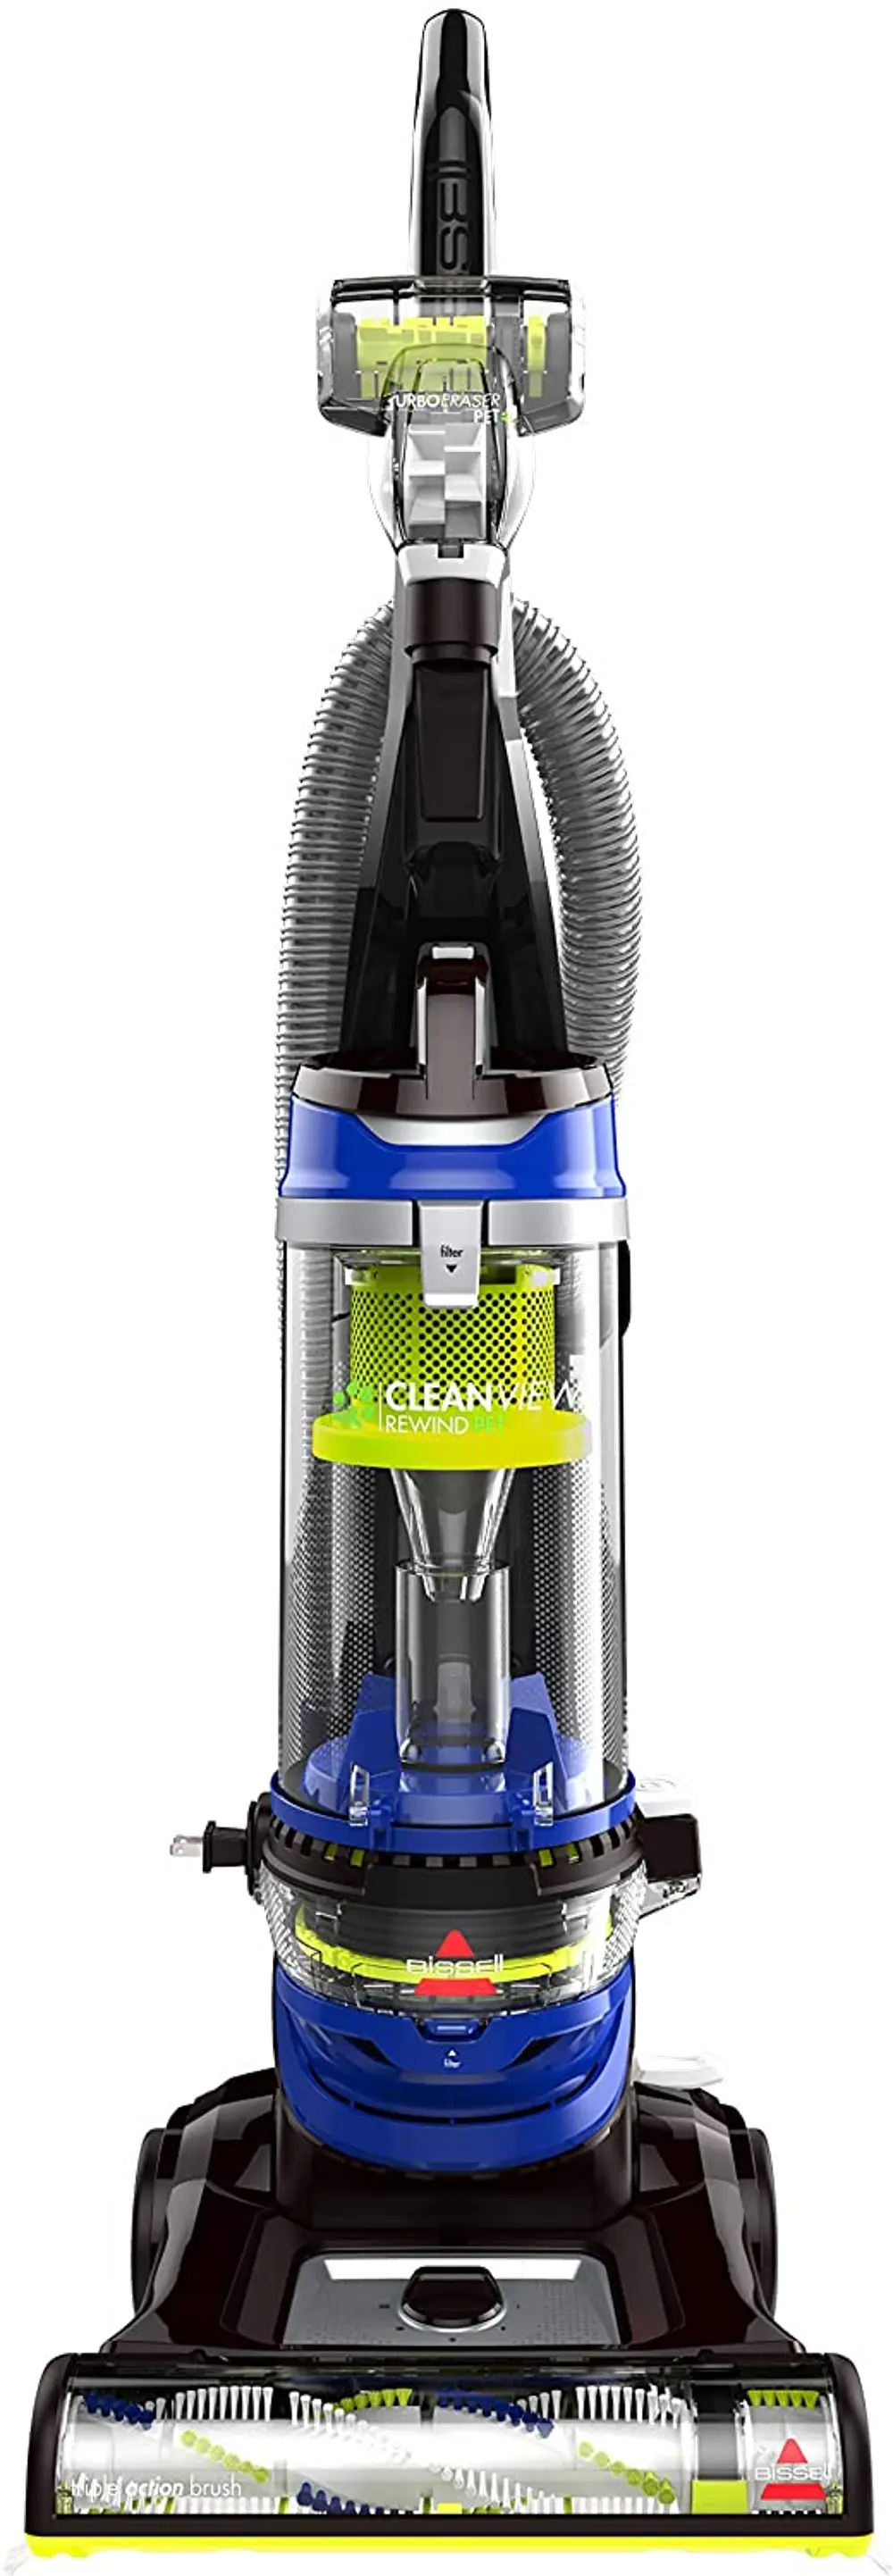 2490/CV_REWIND_PET Bissell Cleanview Rewind Pet Bagless Vacuum Cleaner-1